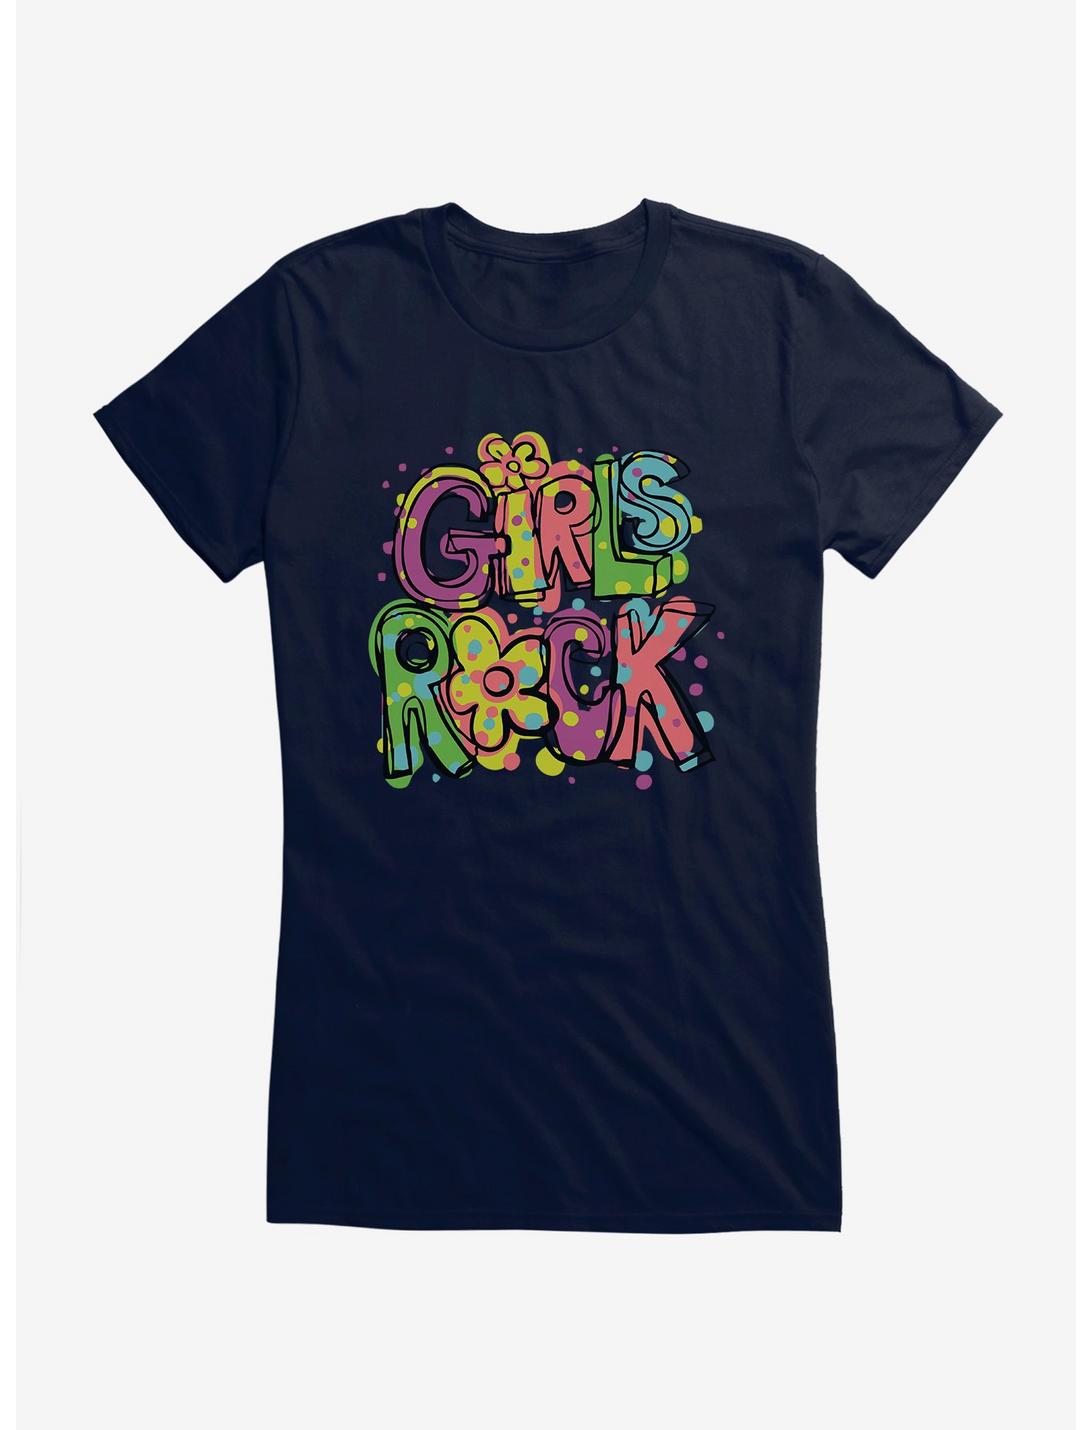 iCreate Girls Rock Girls T-Shirt, , hi-res